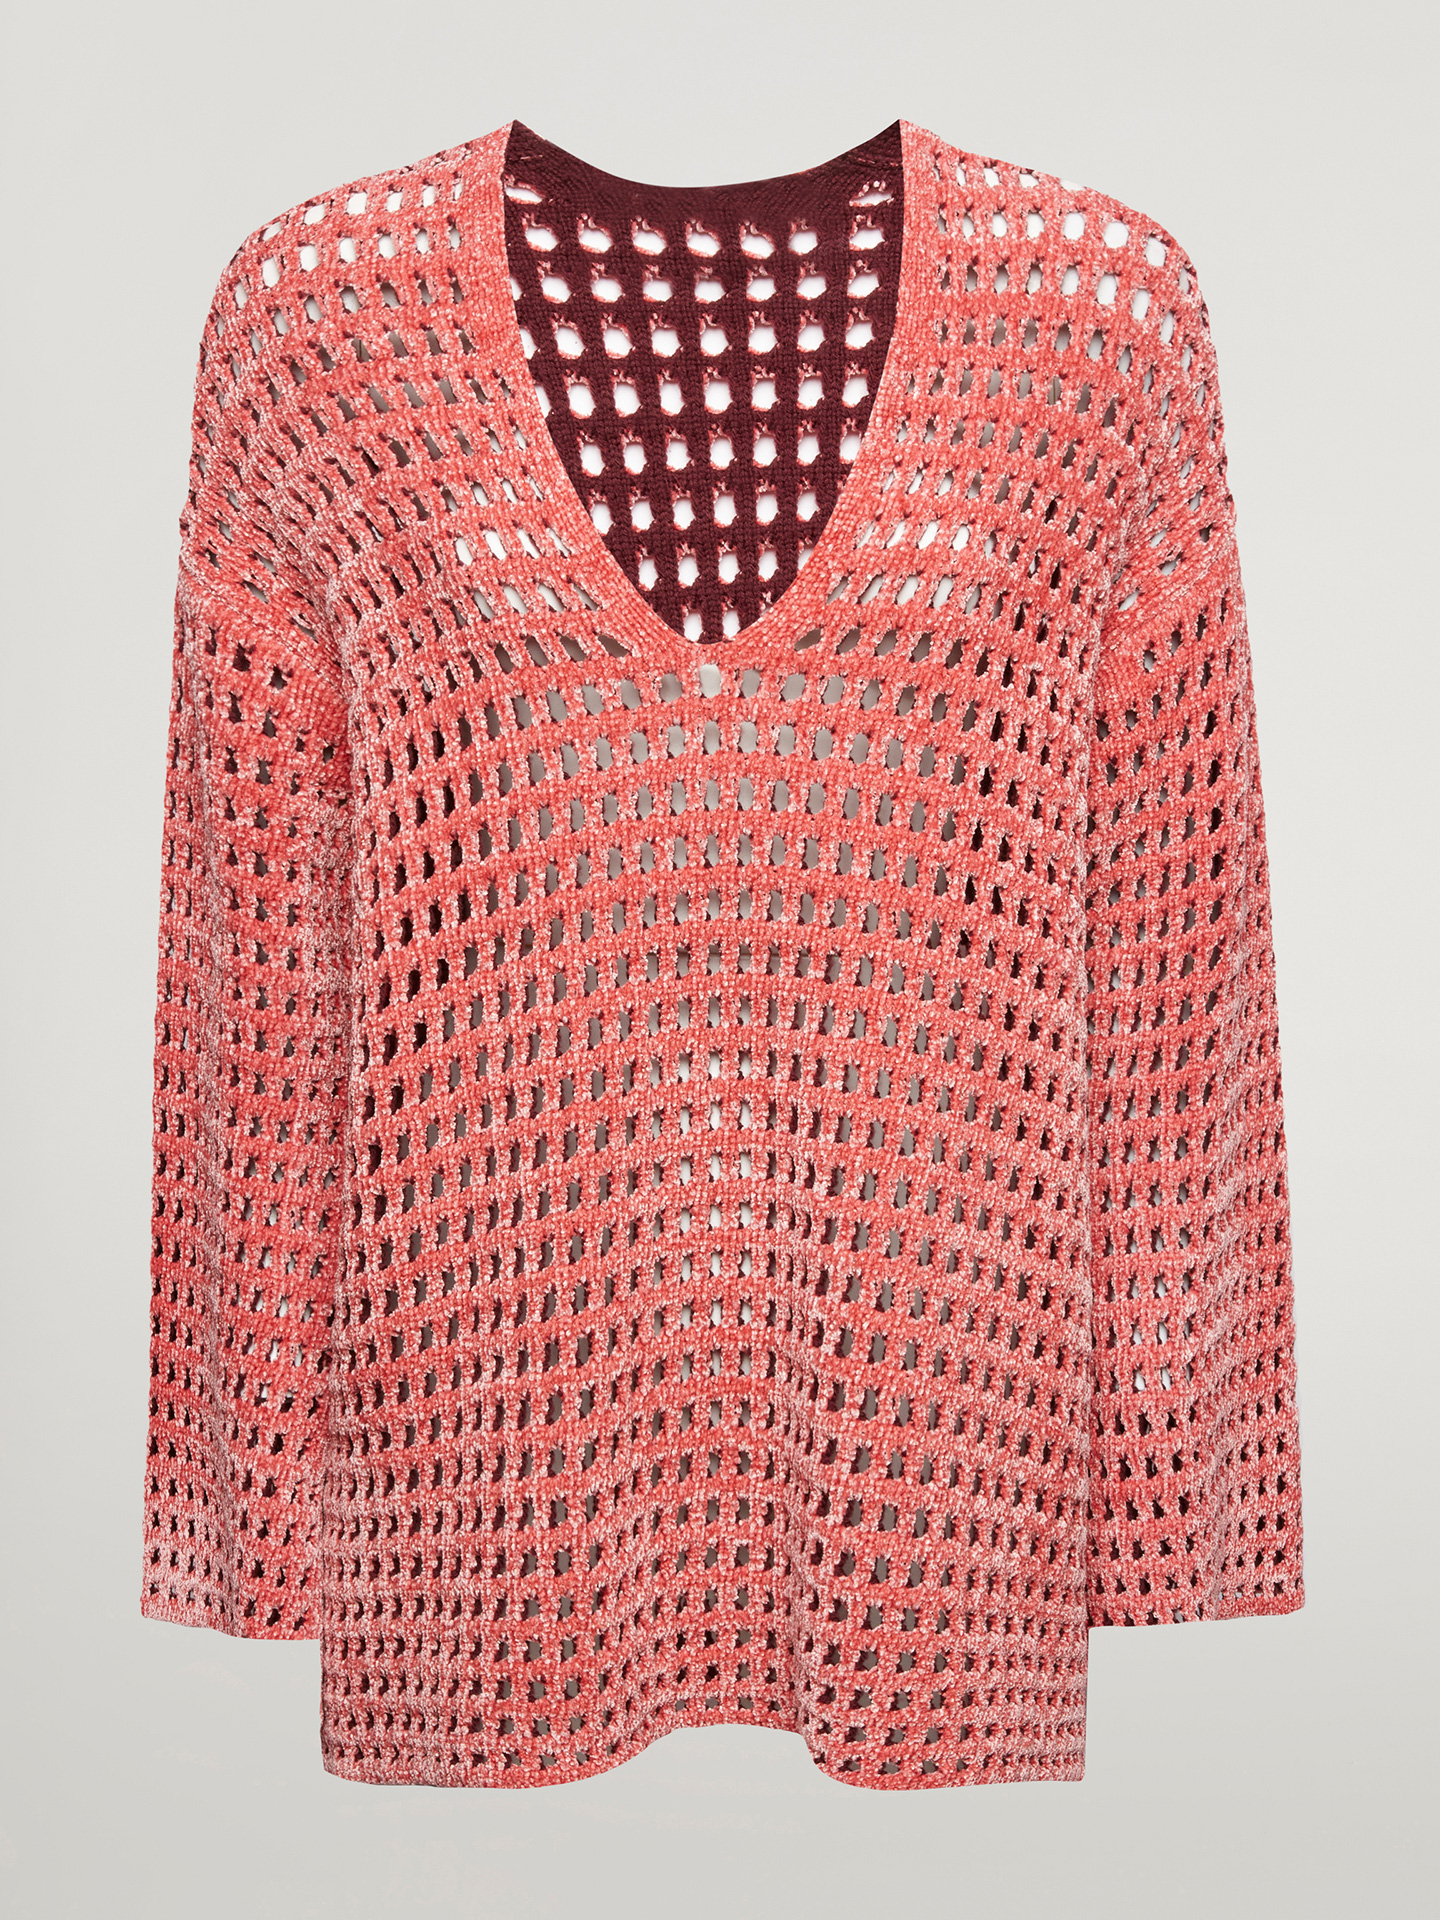 Wolford - Knit Net Top Long Sleeves, Frau, brandied apricot, Größe: M günstig online kaufen